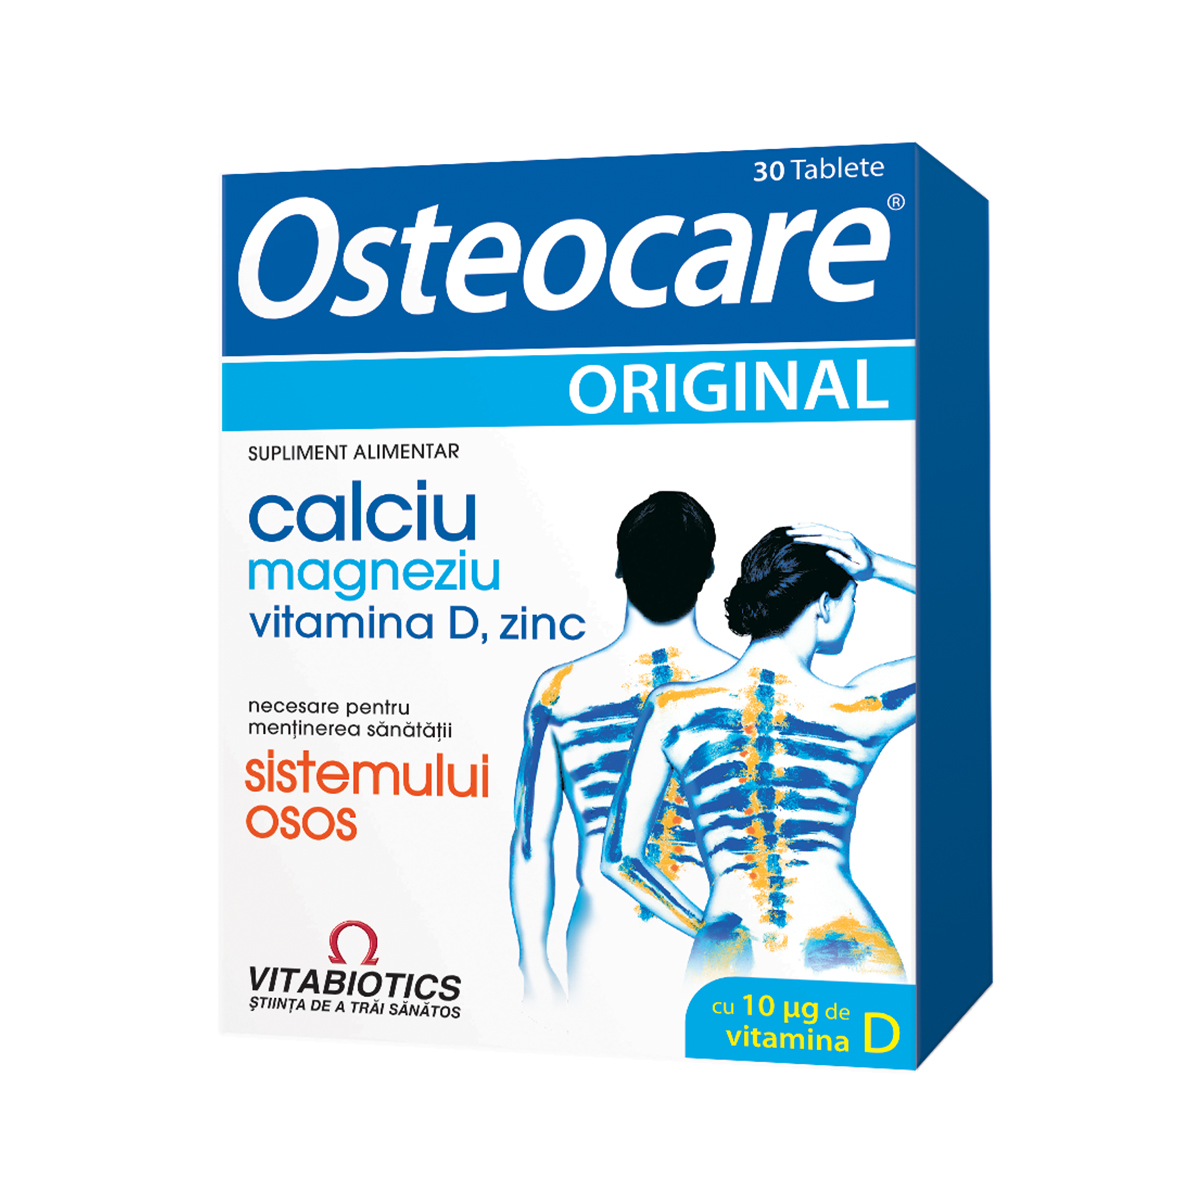 Stare de bine - Osteocare Original x 30 tb (Vitabiotics), epastila.ro